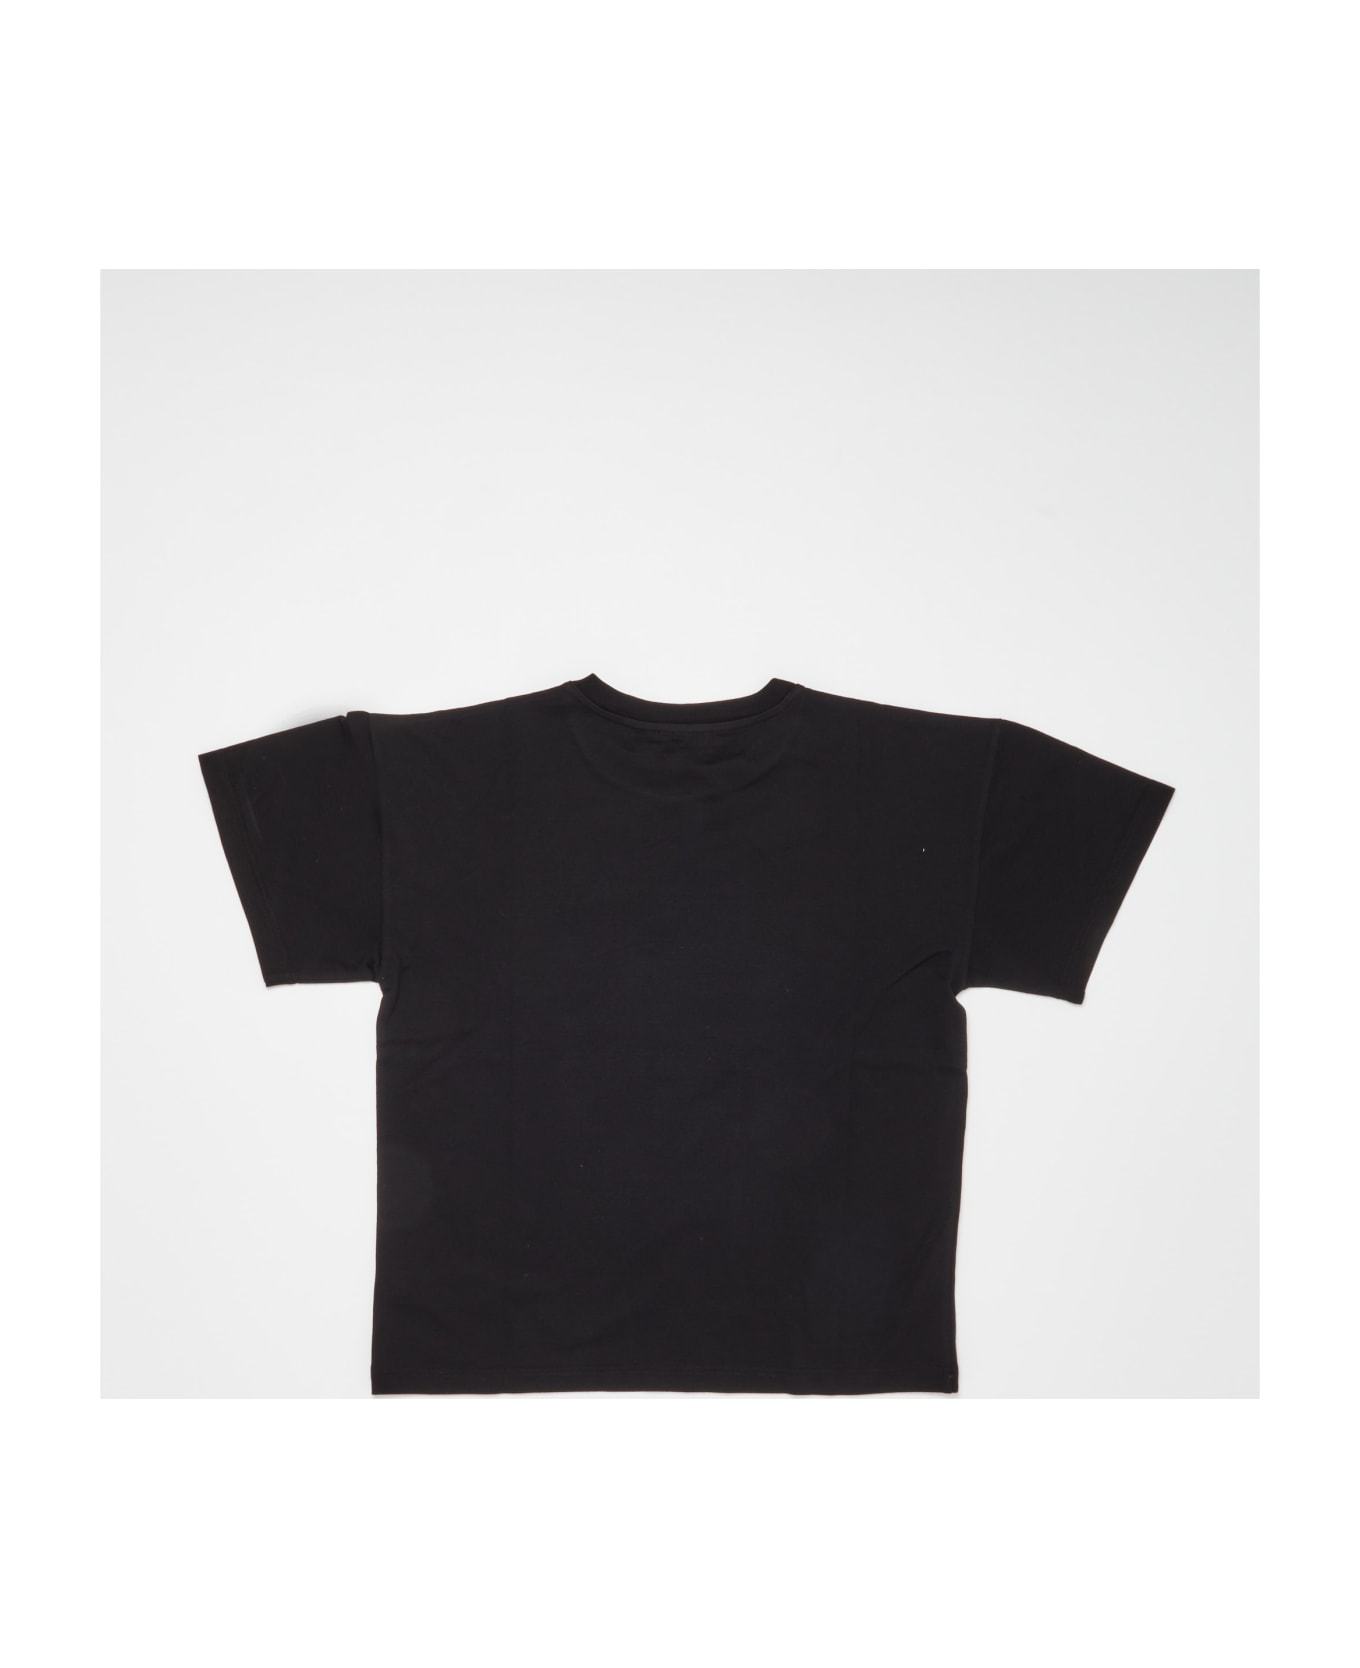 Dolce & Gabbana T-shirt T-shirt - NERO